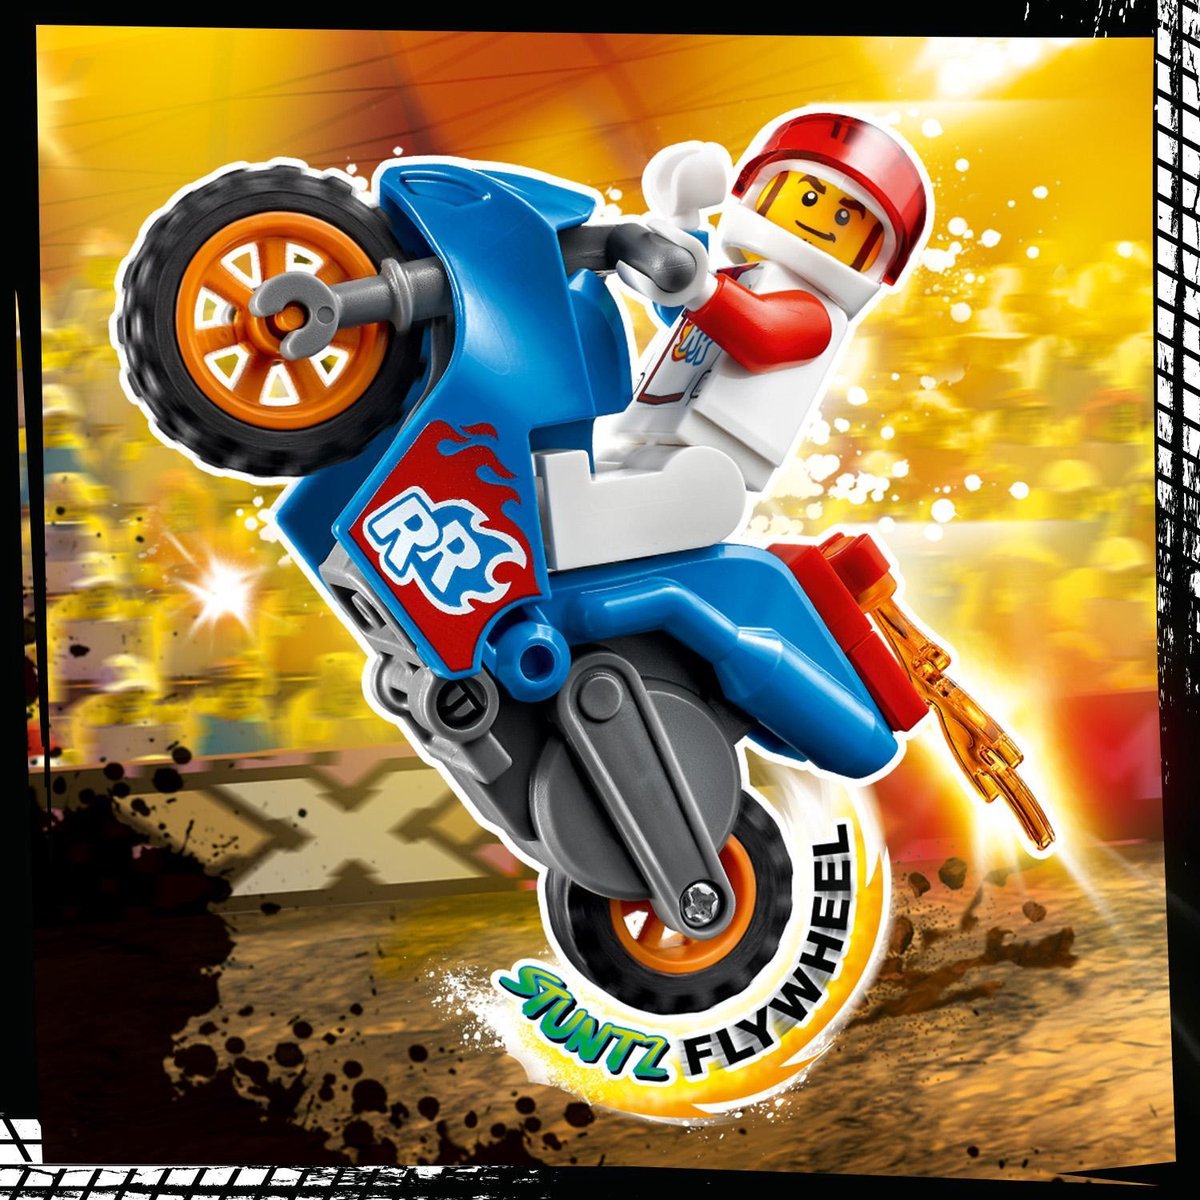 LEGO® 60298 City Stuntz La Moto de Cascade Fusée, Moto à